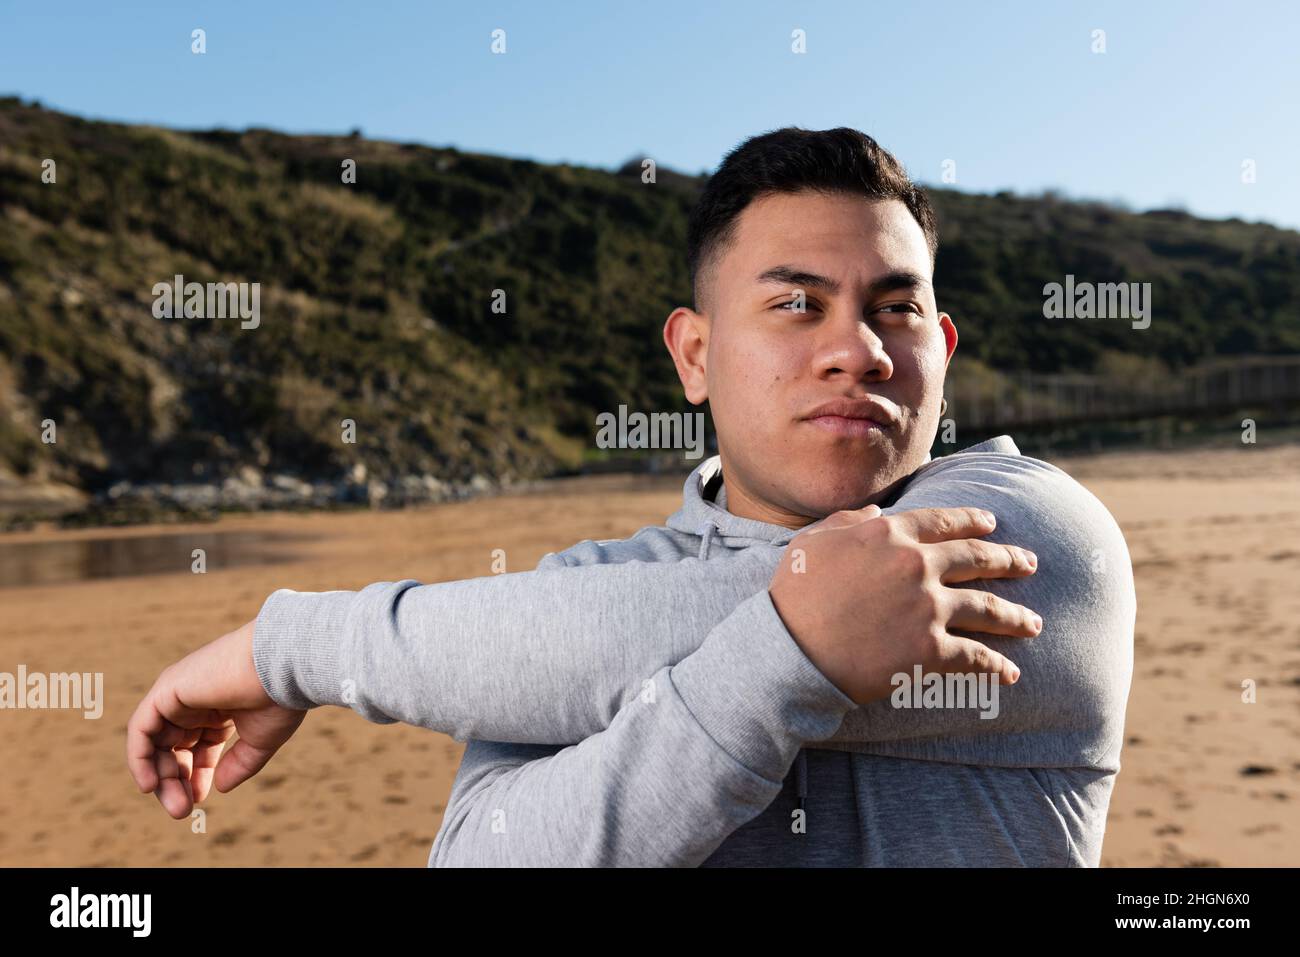 Hispanic man stretching arms at the beach Stock Photo